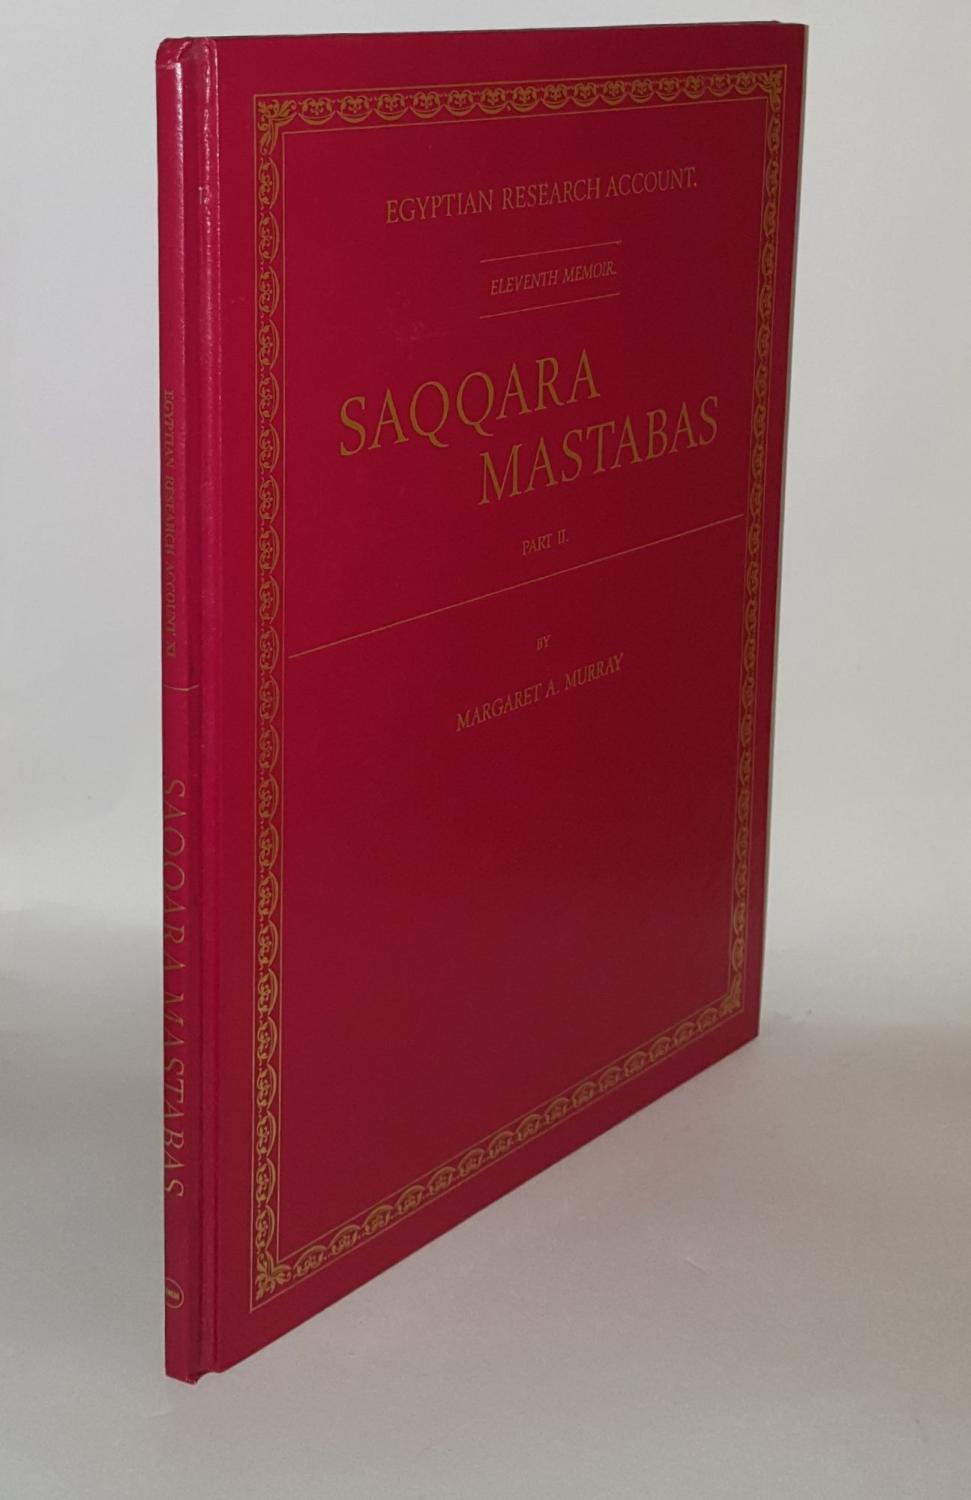 SAQQARA MASTABAS Part II Egyptian Research Account Eleventh Memoir - MURRAY Margaret A., SETHE Kurt